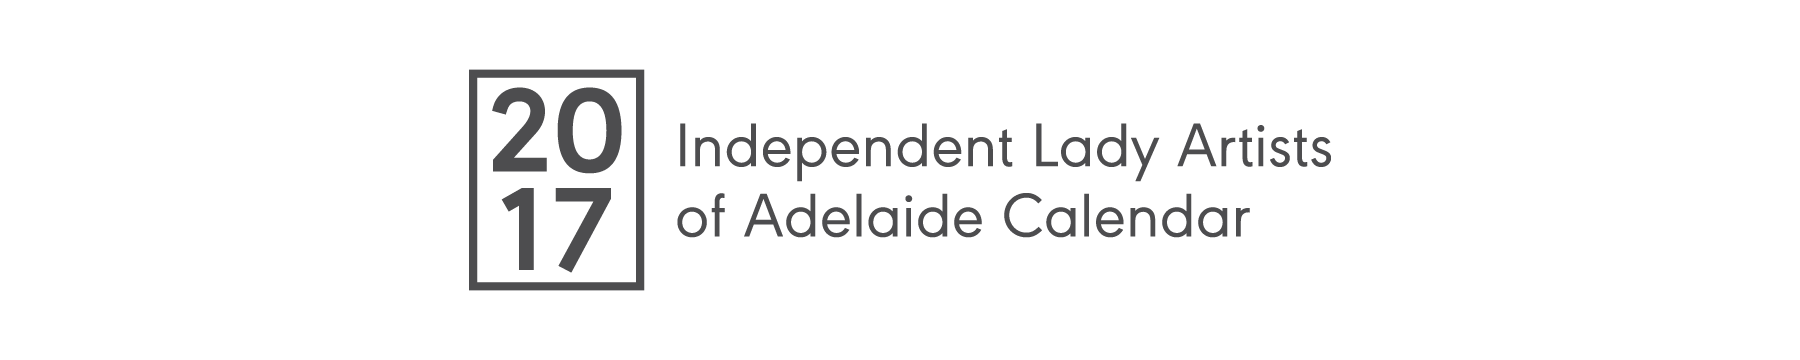 Lady Artists of Adelaide Calendar